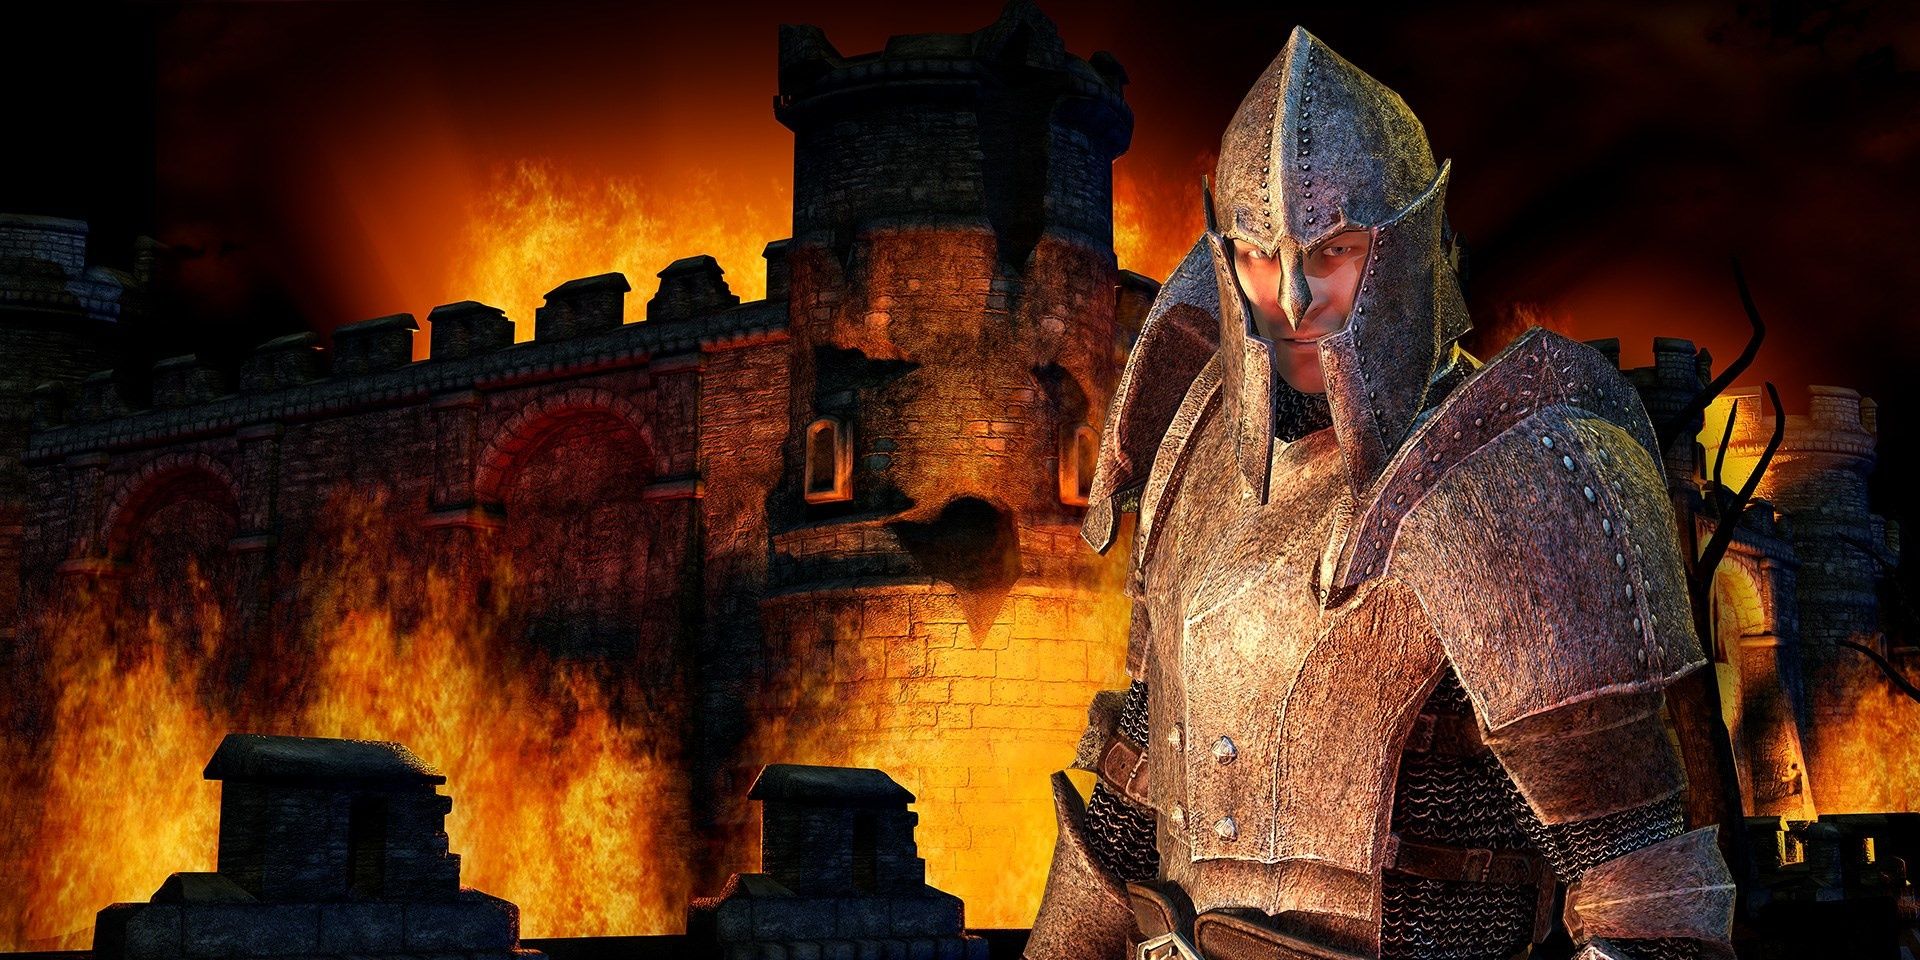 Cover art from the Elder Scrolls 4: Oblivion